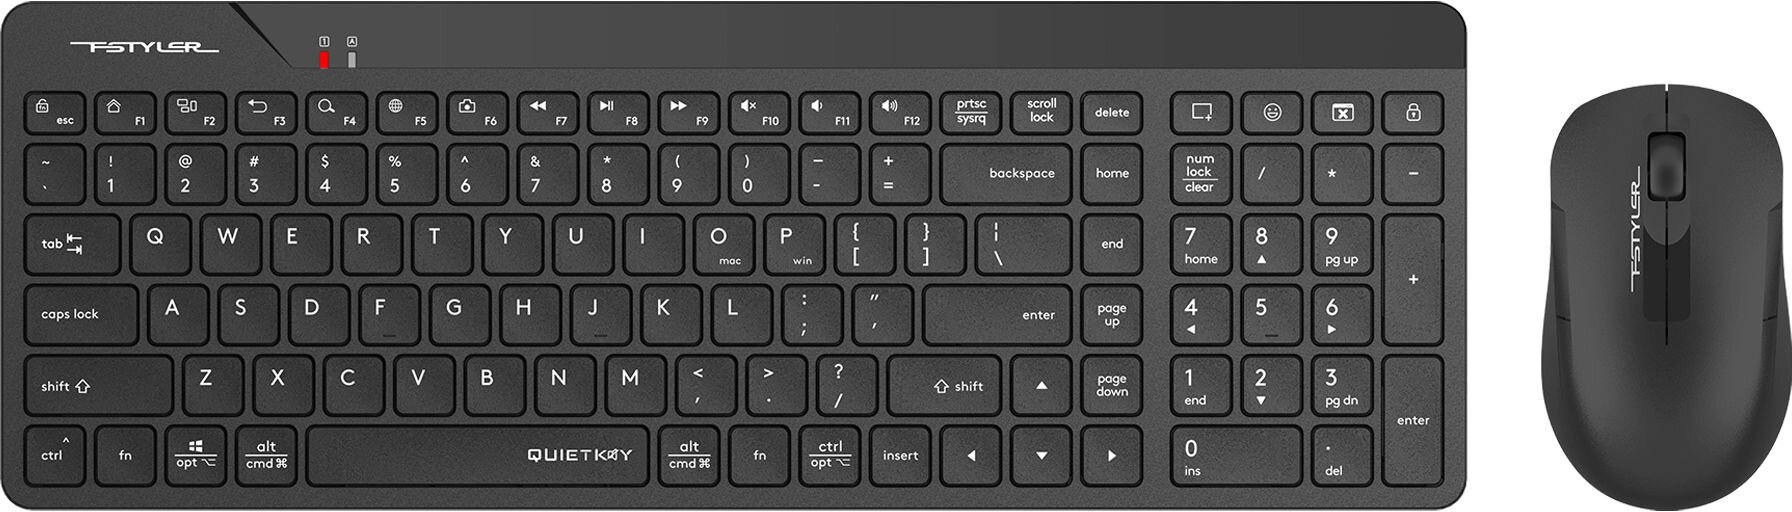 Клавиатура + мышь A4Tech Fstyler FG2300 Air клав: черный мышь: черный USB беспроводная slim (FG2300 AIR BLACK)